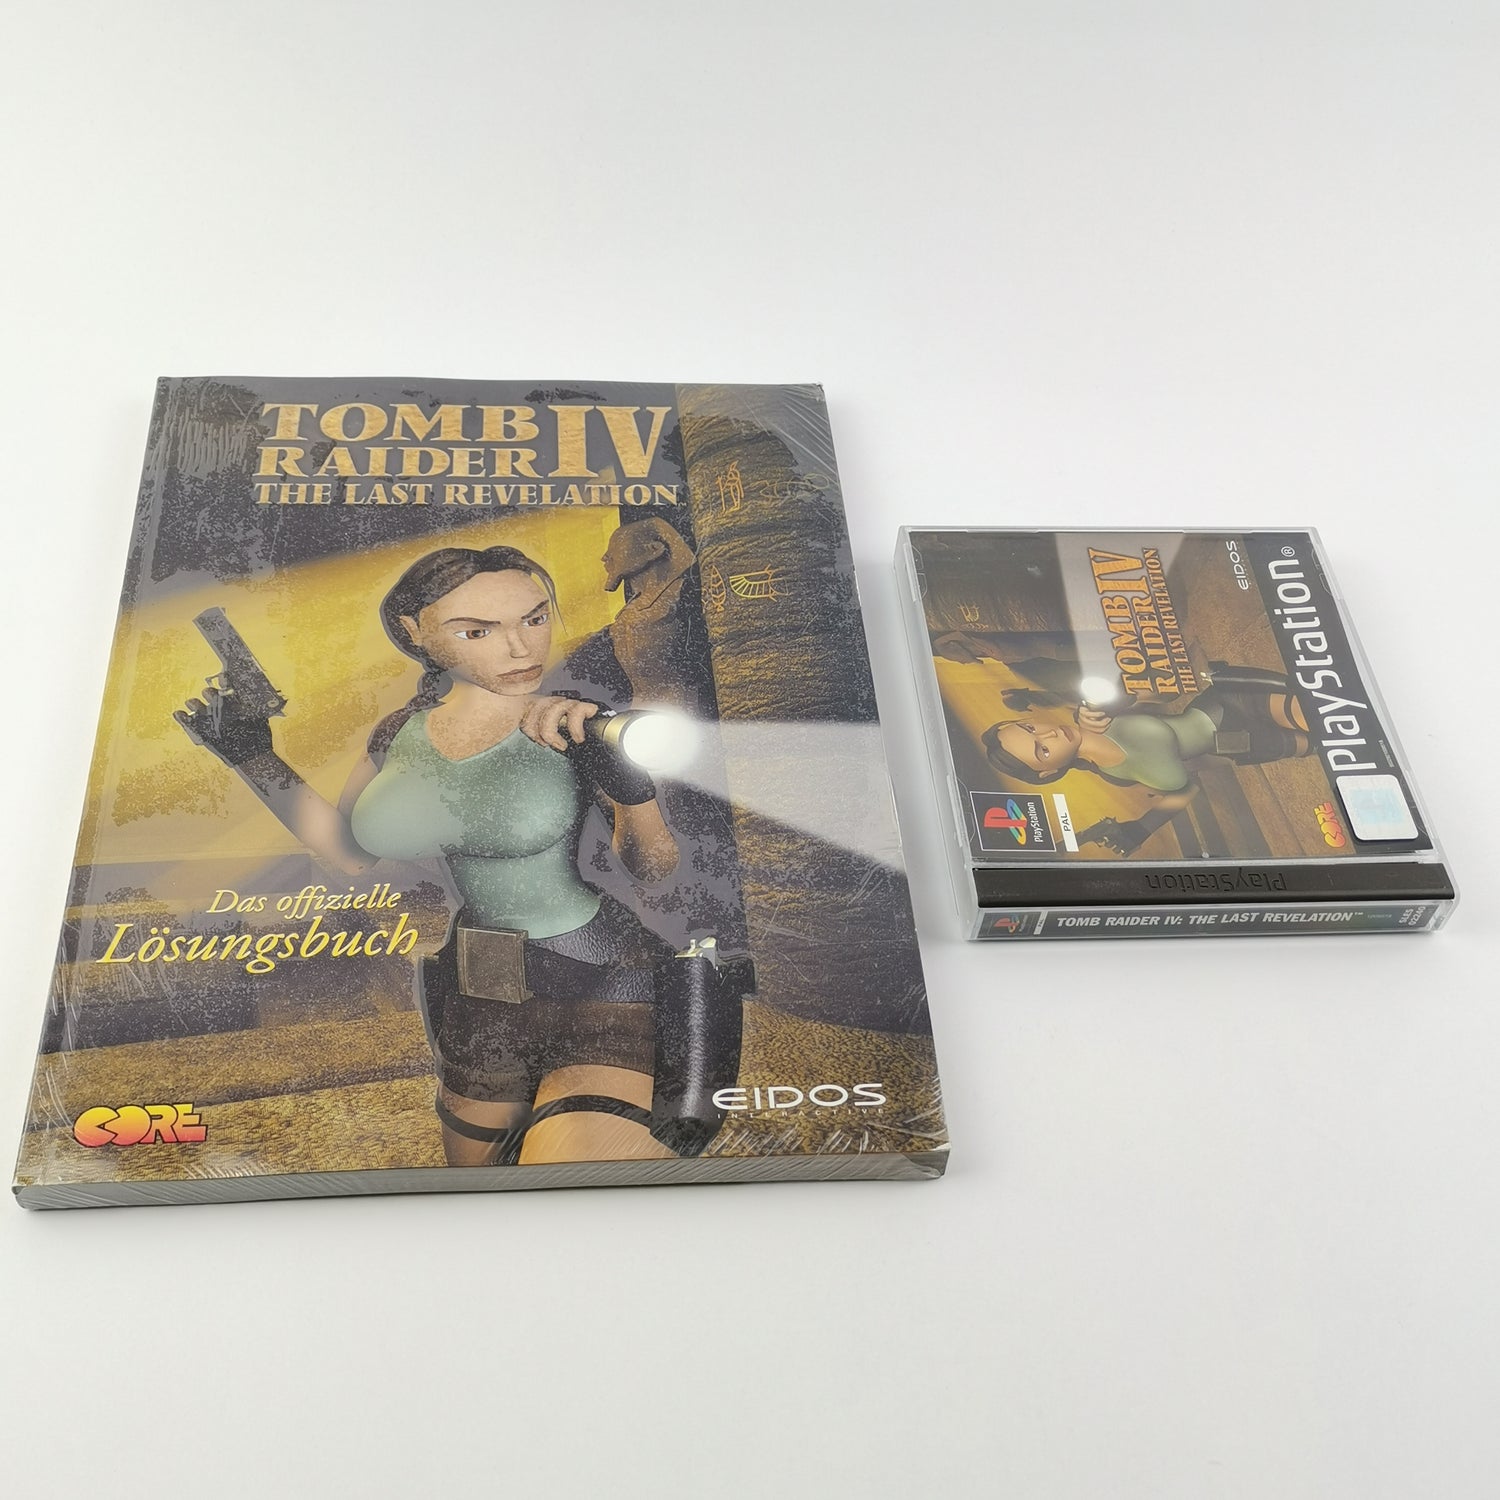 Sony Playstation 1 Spiel : Tomb Raider IV The Last Revelation + Lösungsbuch PS1